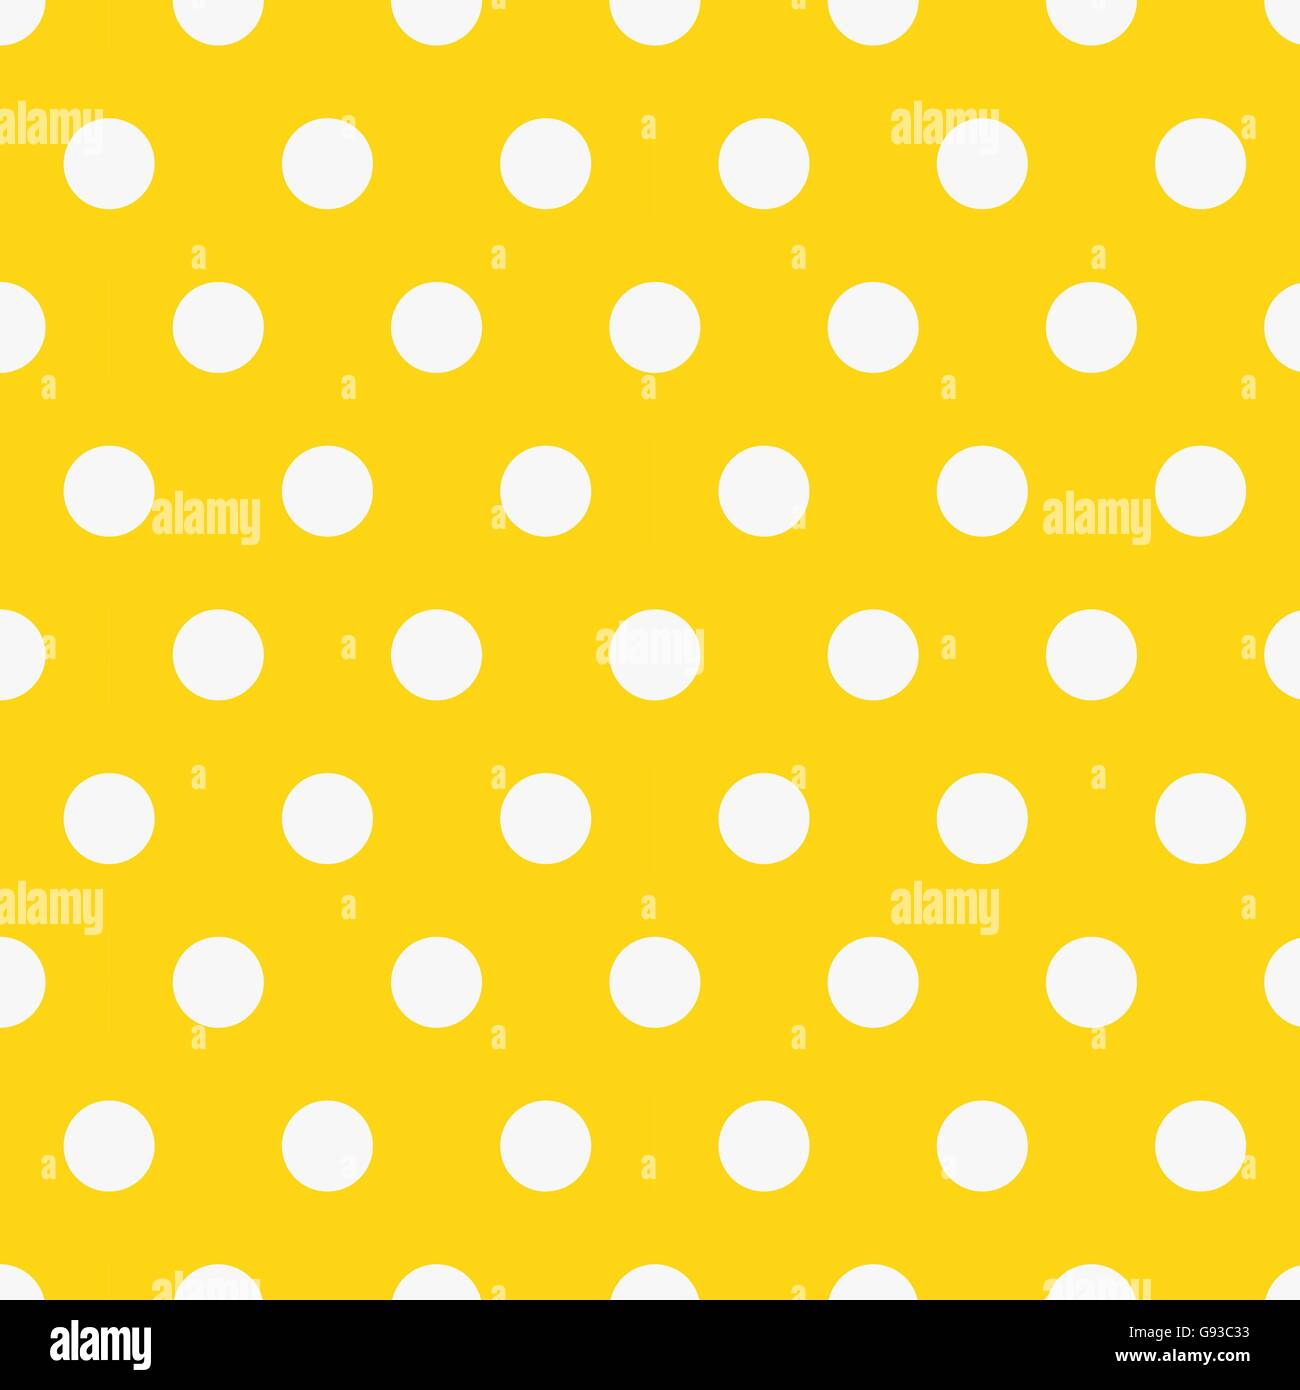 Seamless polka dot pattern background Stock Vector